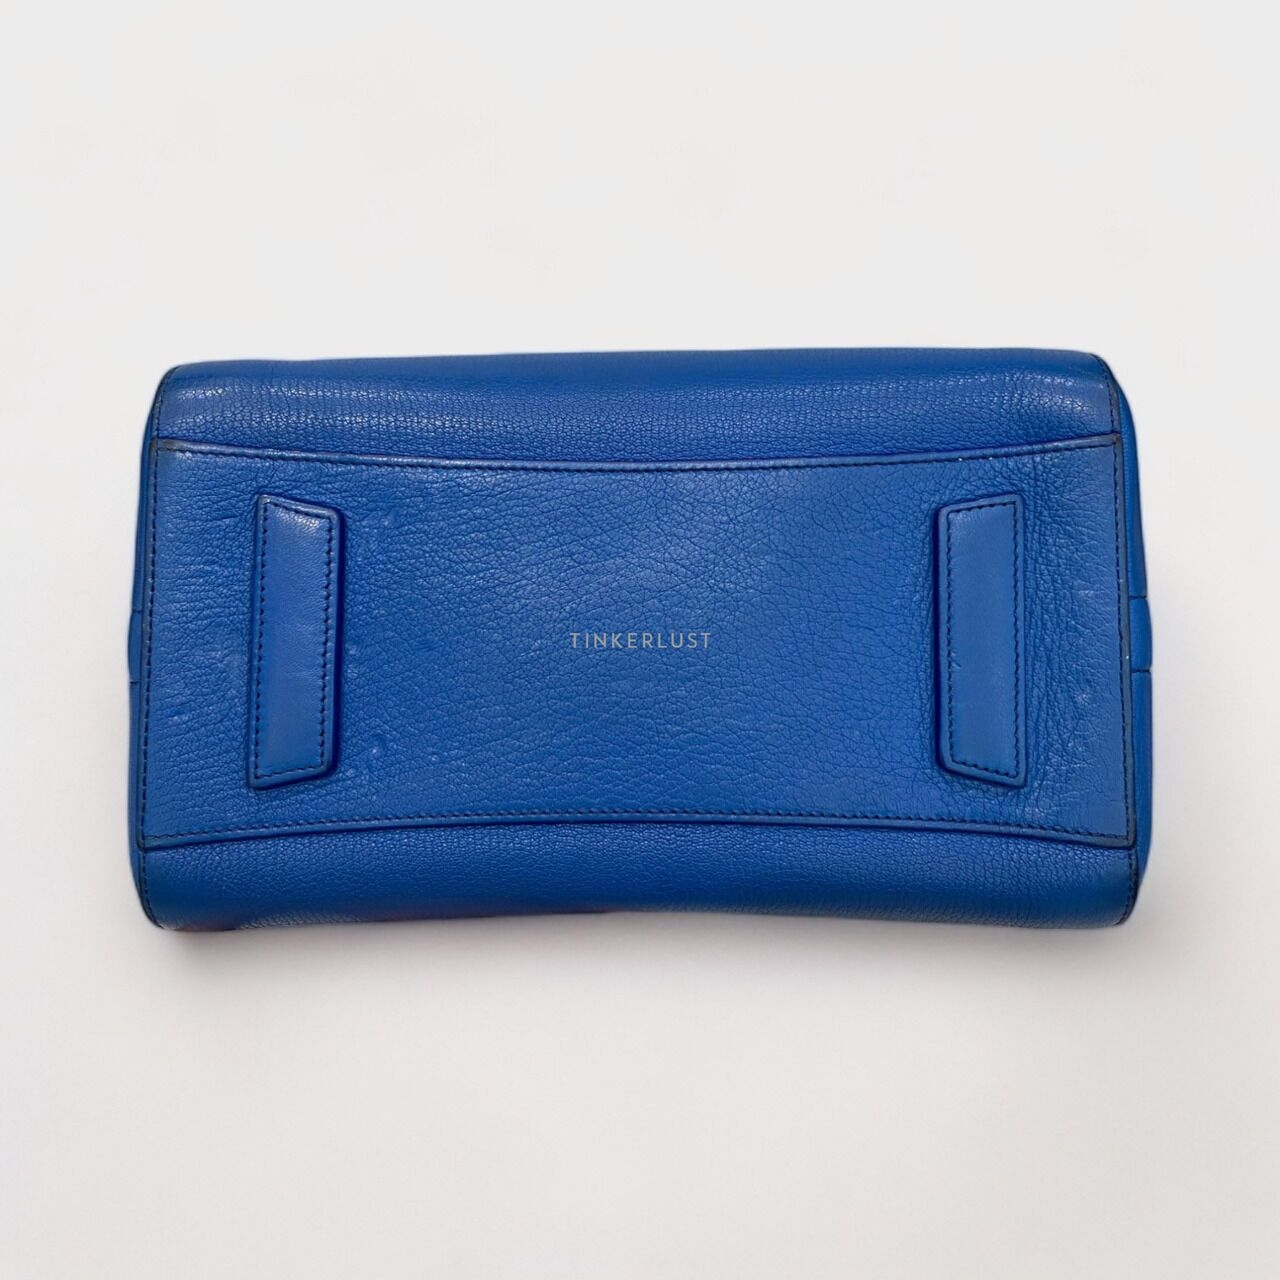 Givenchy Antigona Small Bag Blue Satchel